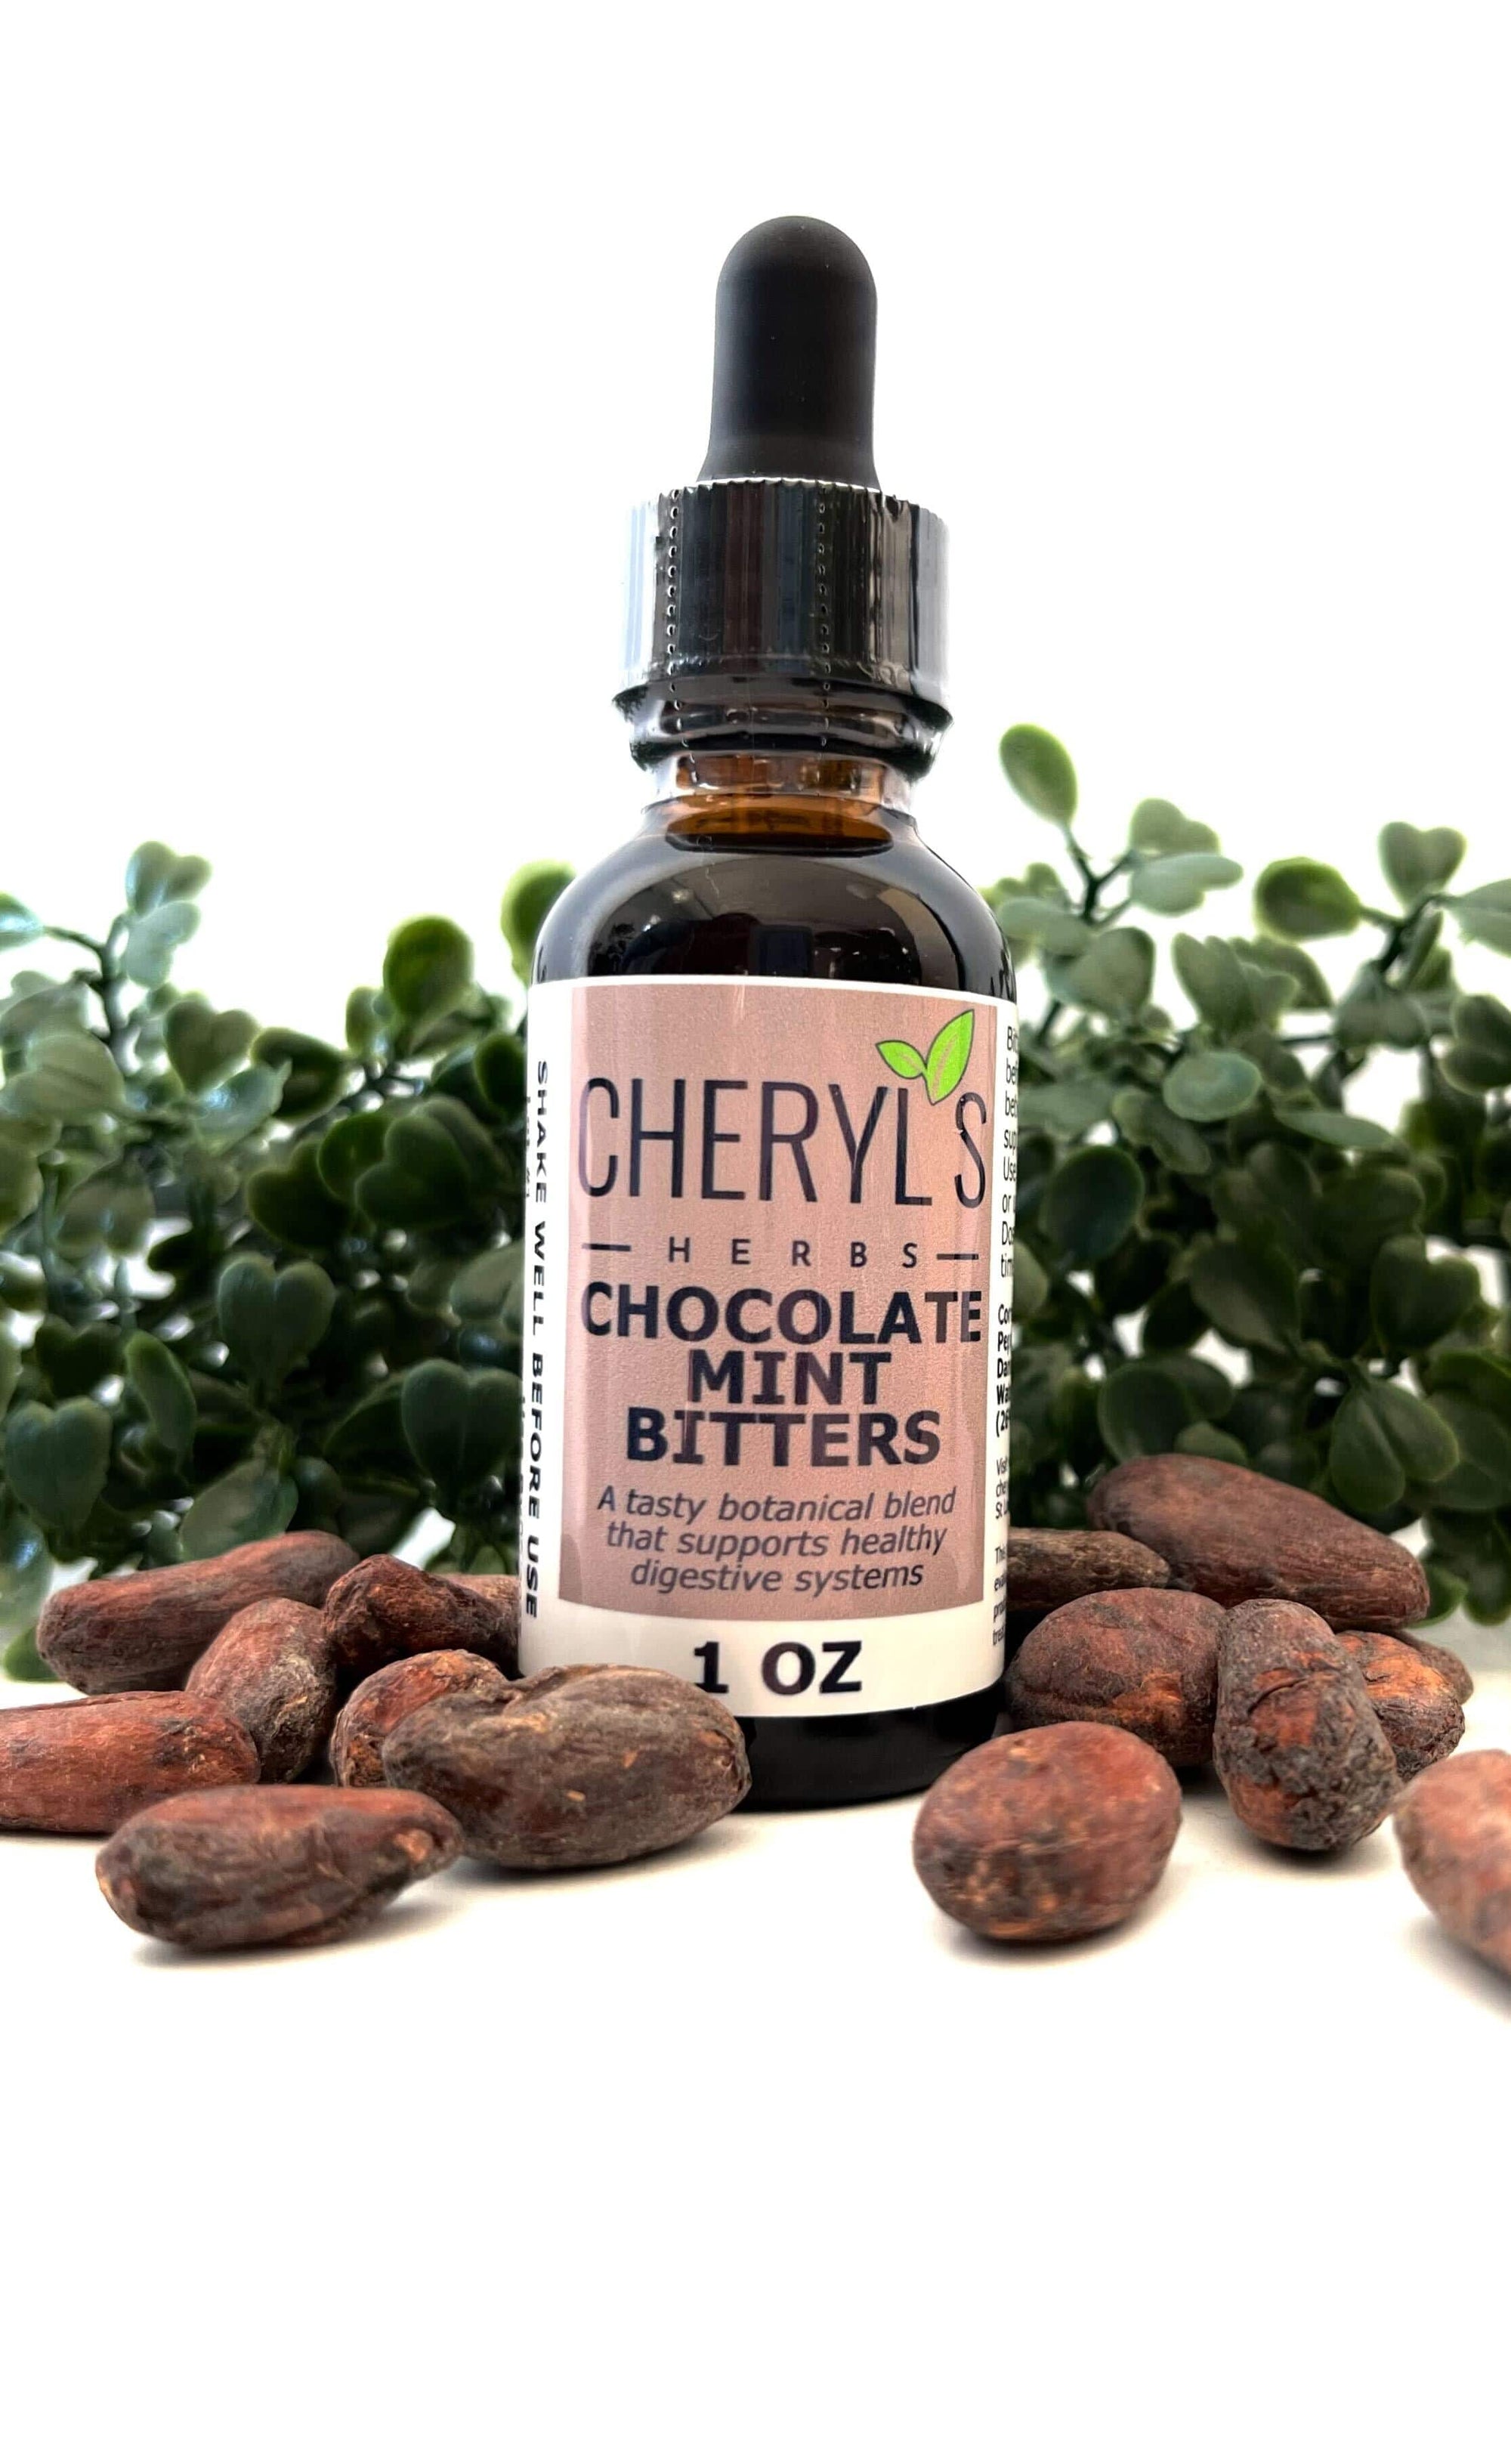 CHOCOLATE MINT BITTERS - Cheryls Herbs